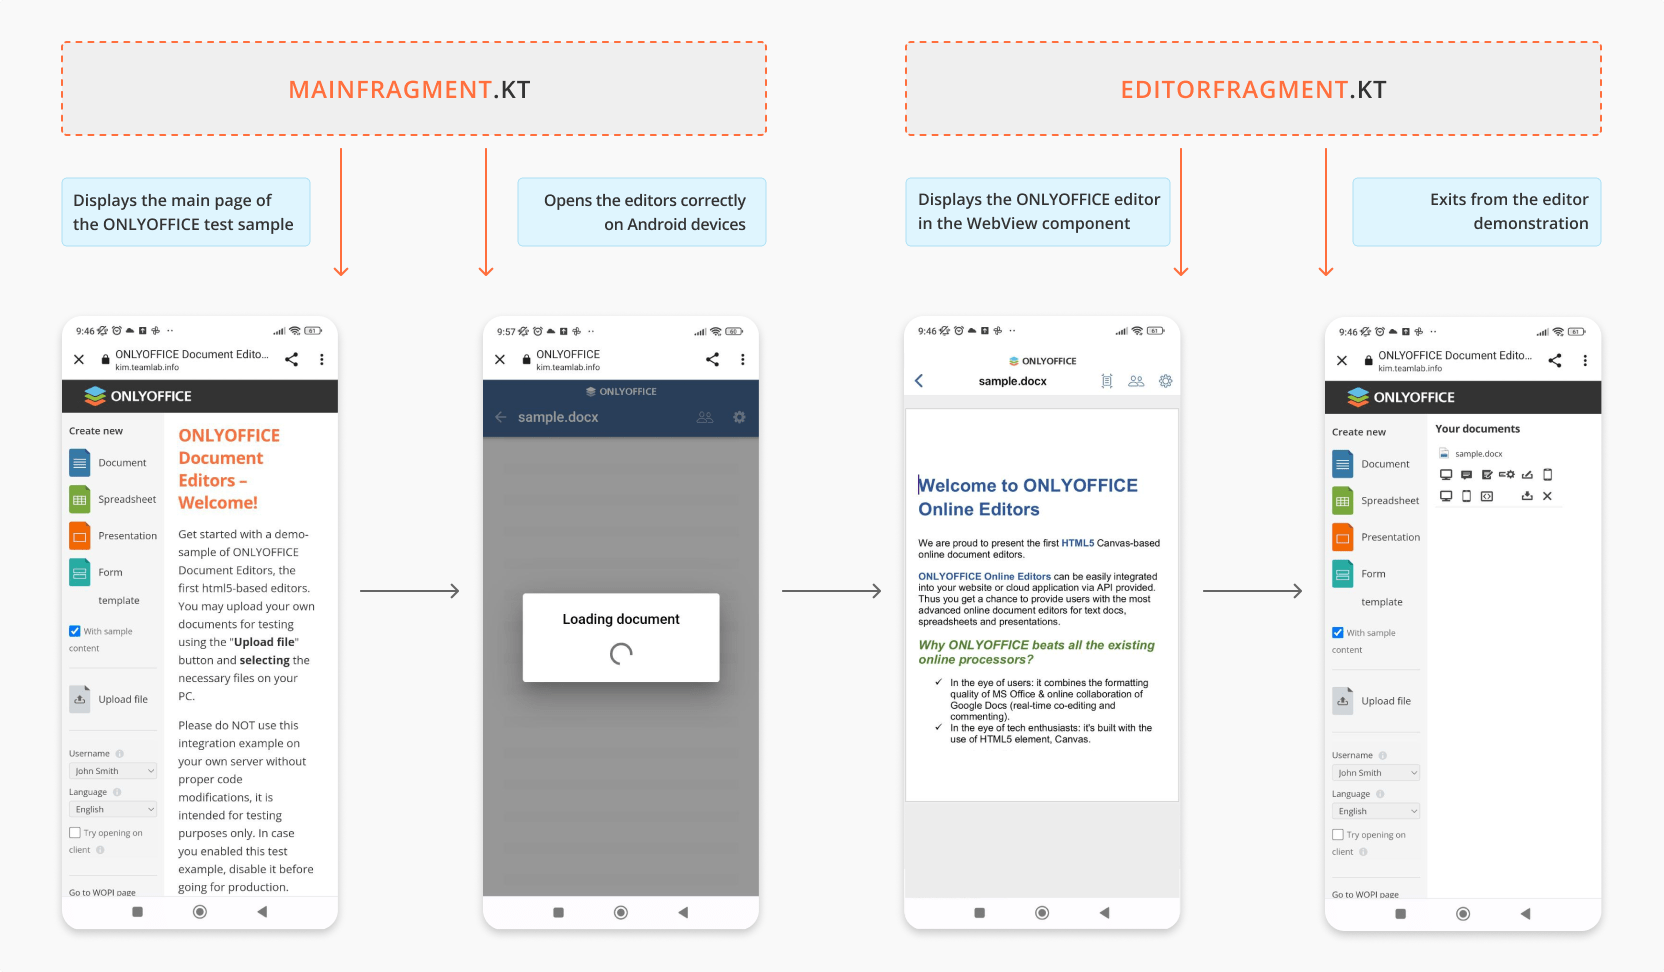 Android integration via test sample